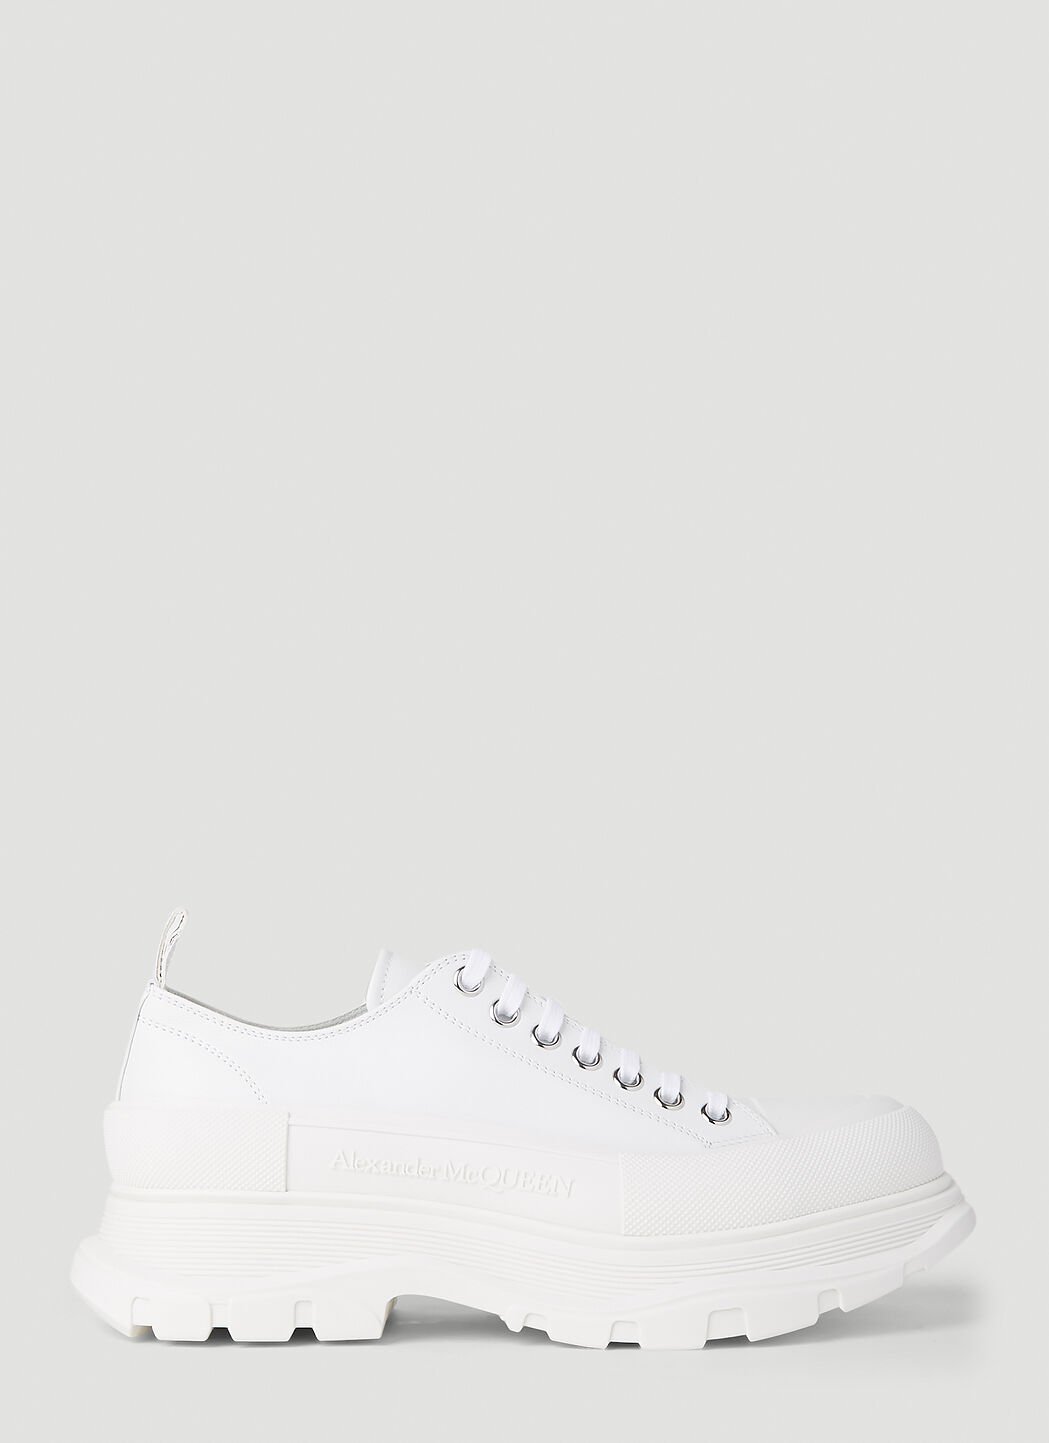 Alexander McQueen Tread Slick 运动鞋 白 amq0149025